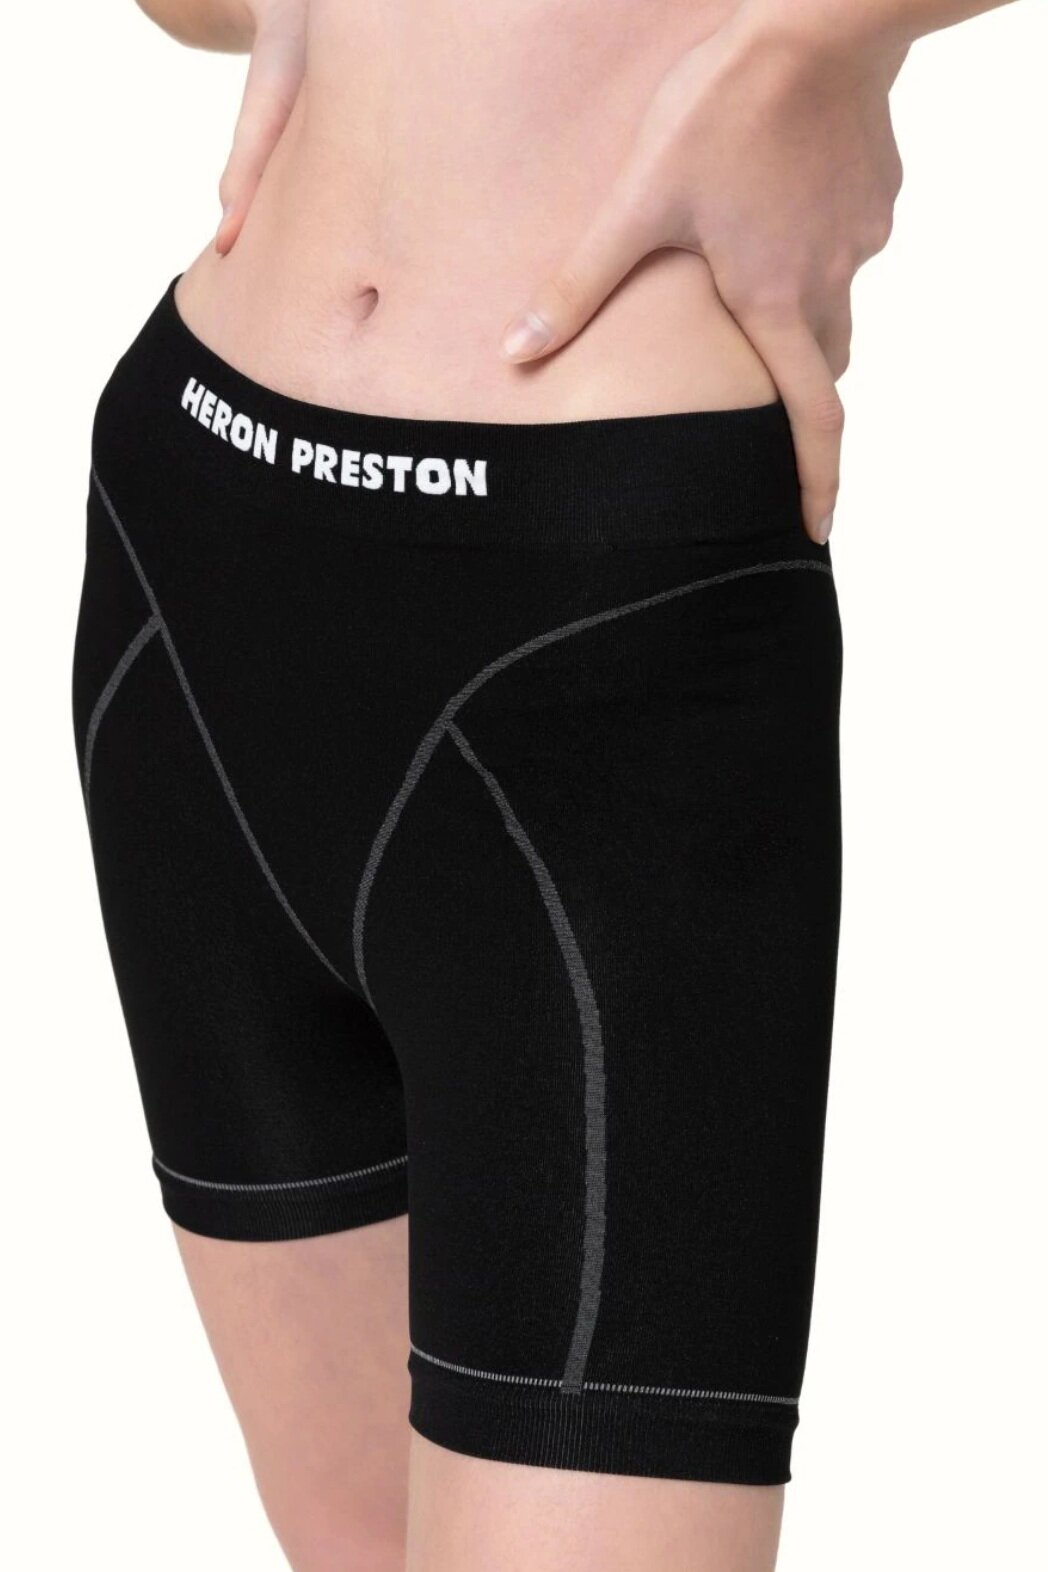 Heron Preston Active Shorts ($330)